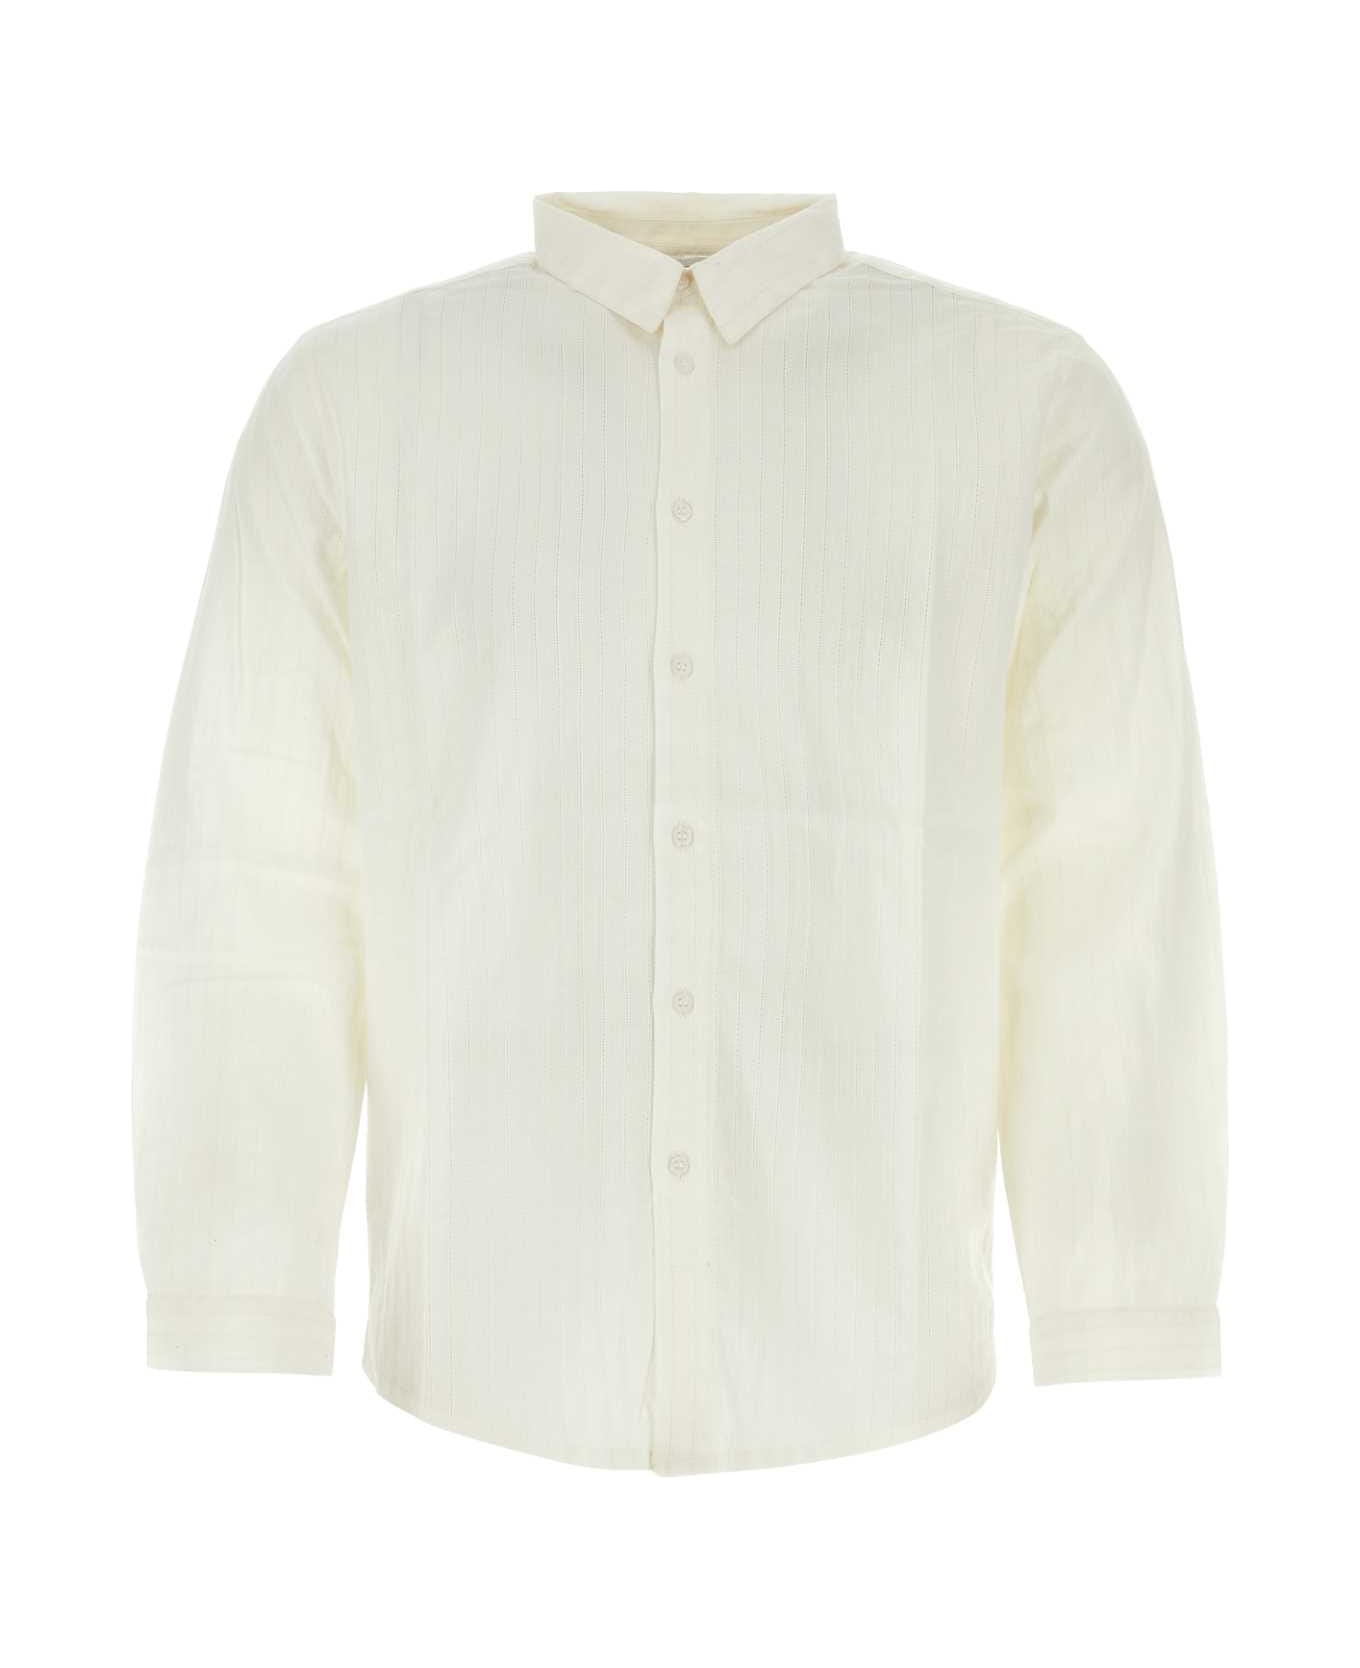 Gimaguas White Cotton Oversize Beau Shirt - WHITE